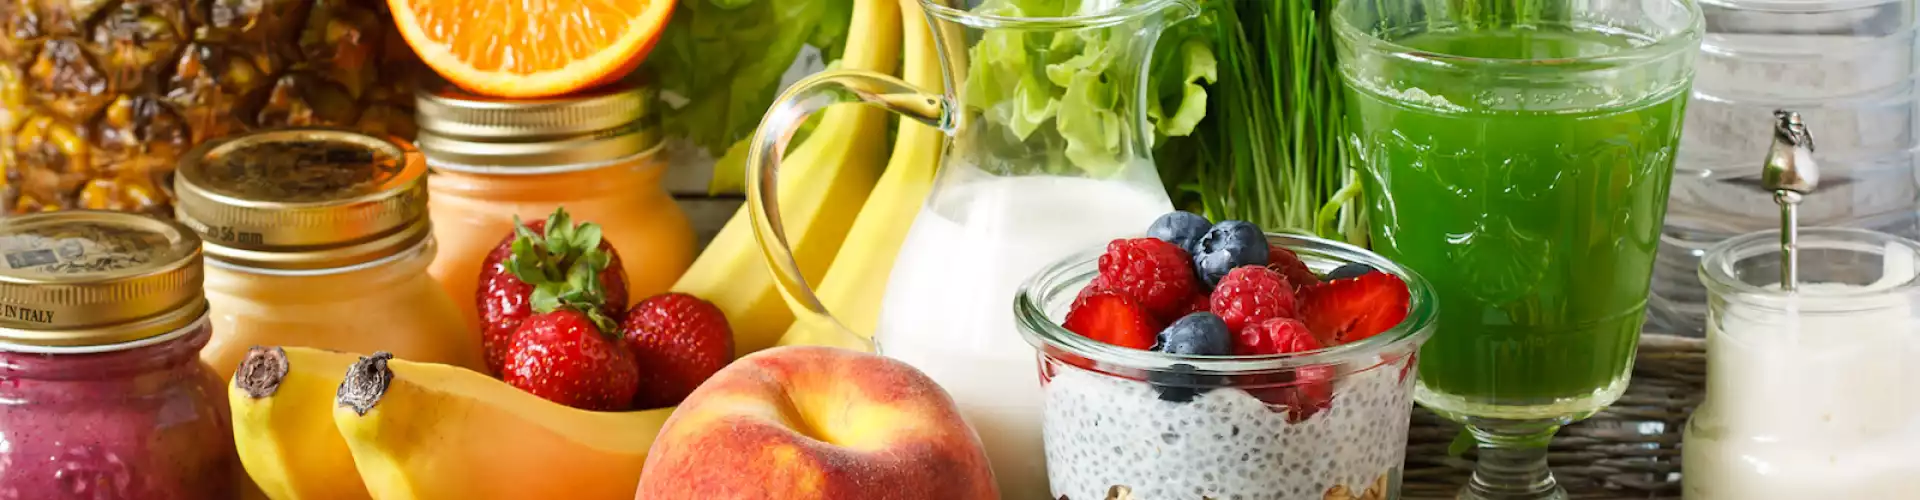 Healthy Plant-Based Breakfast Meal Ideas 